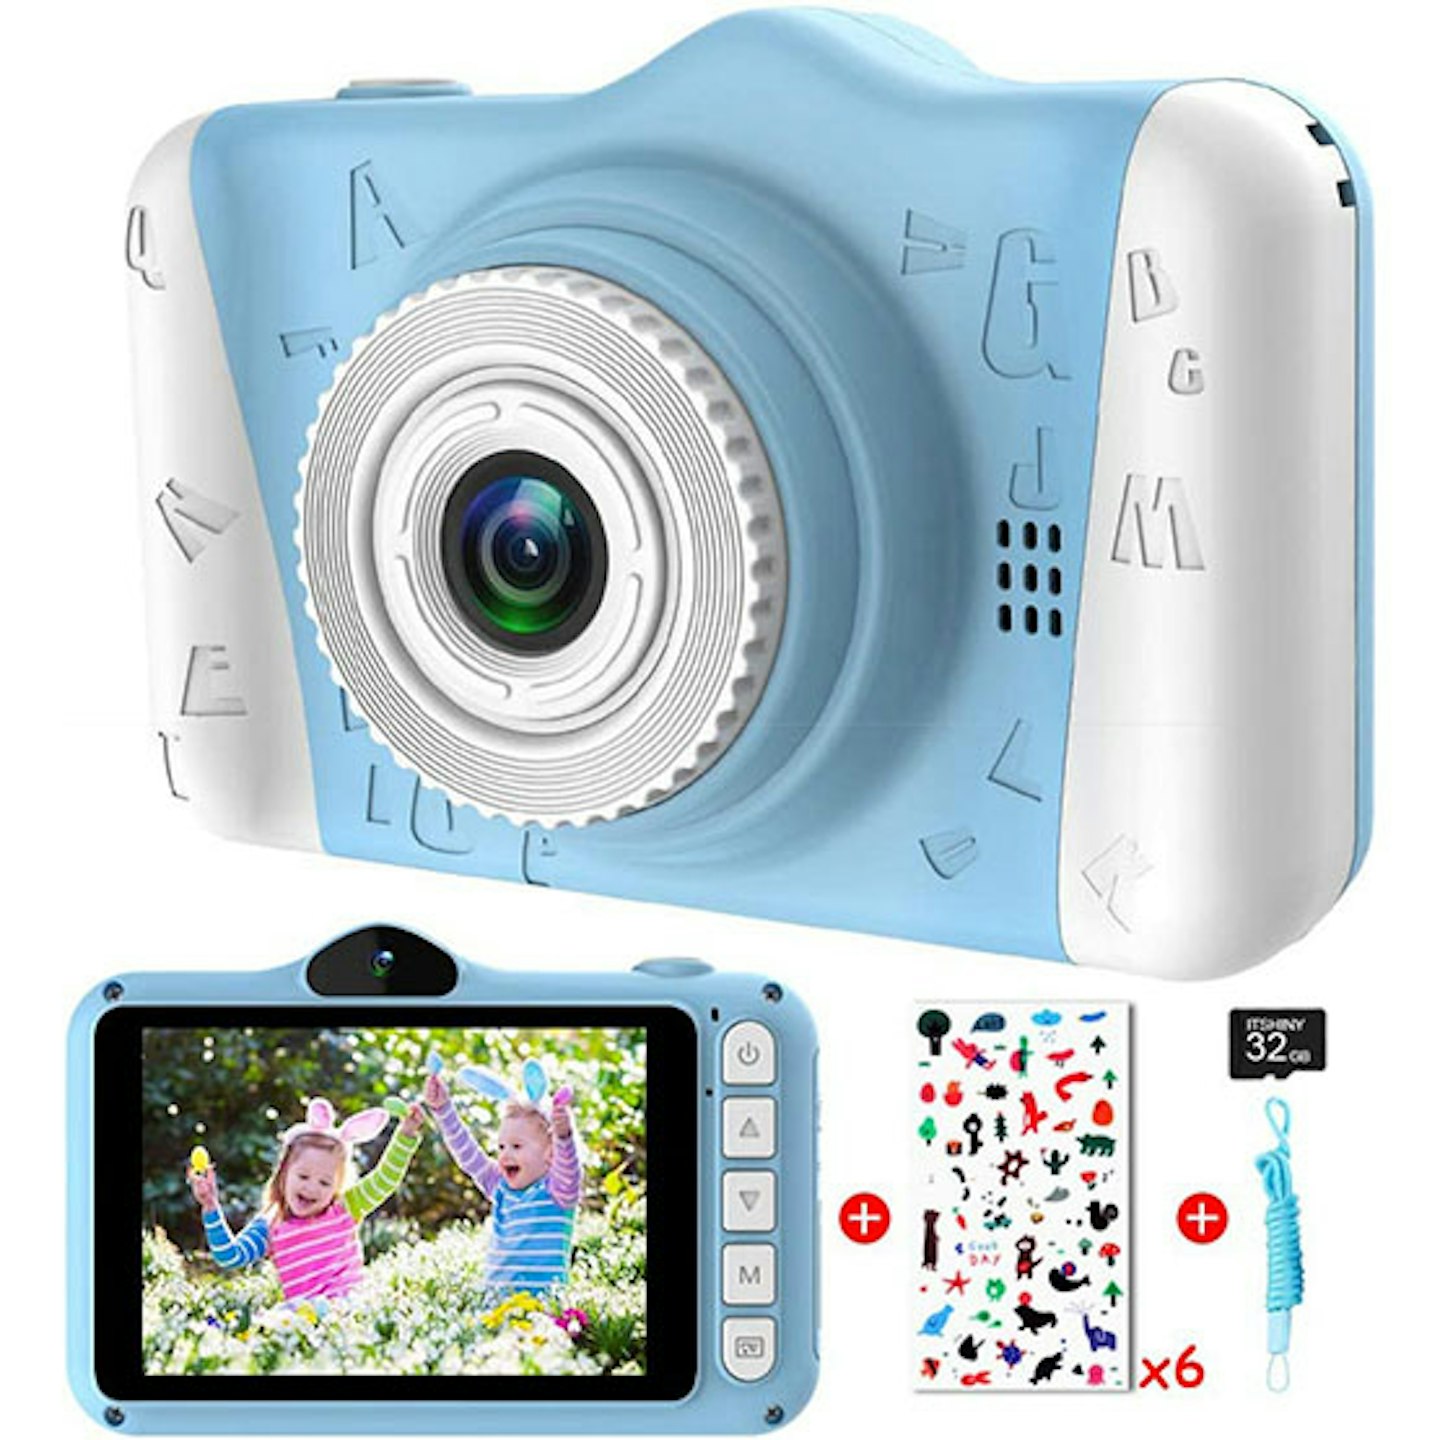 Digital toddler camera